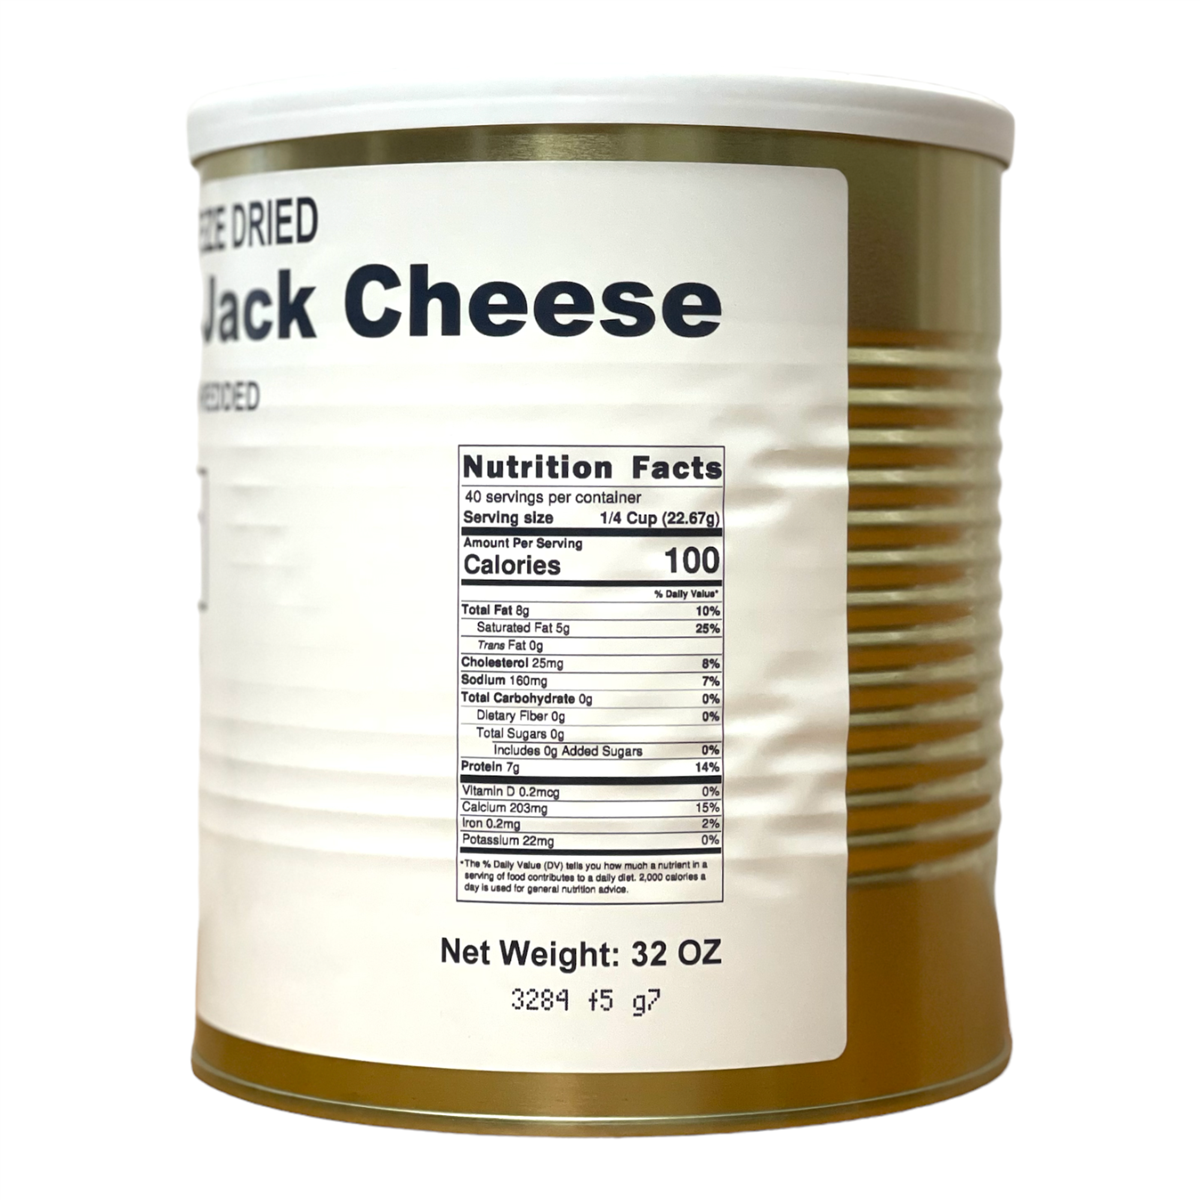 Military Surplus Freeze Dried Monterey Jack Cheese